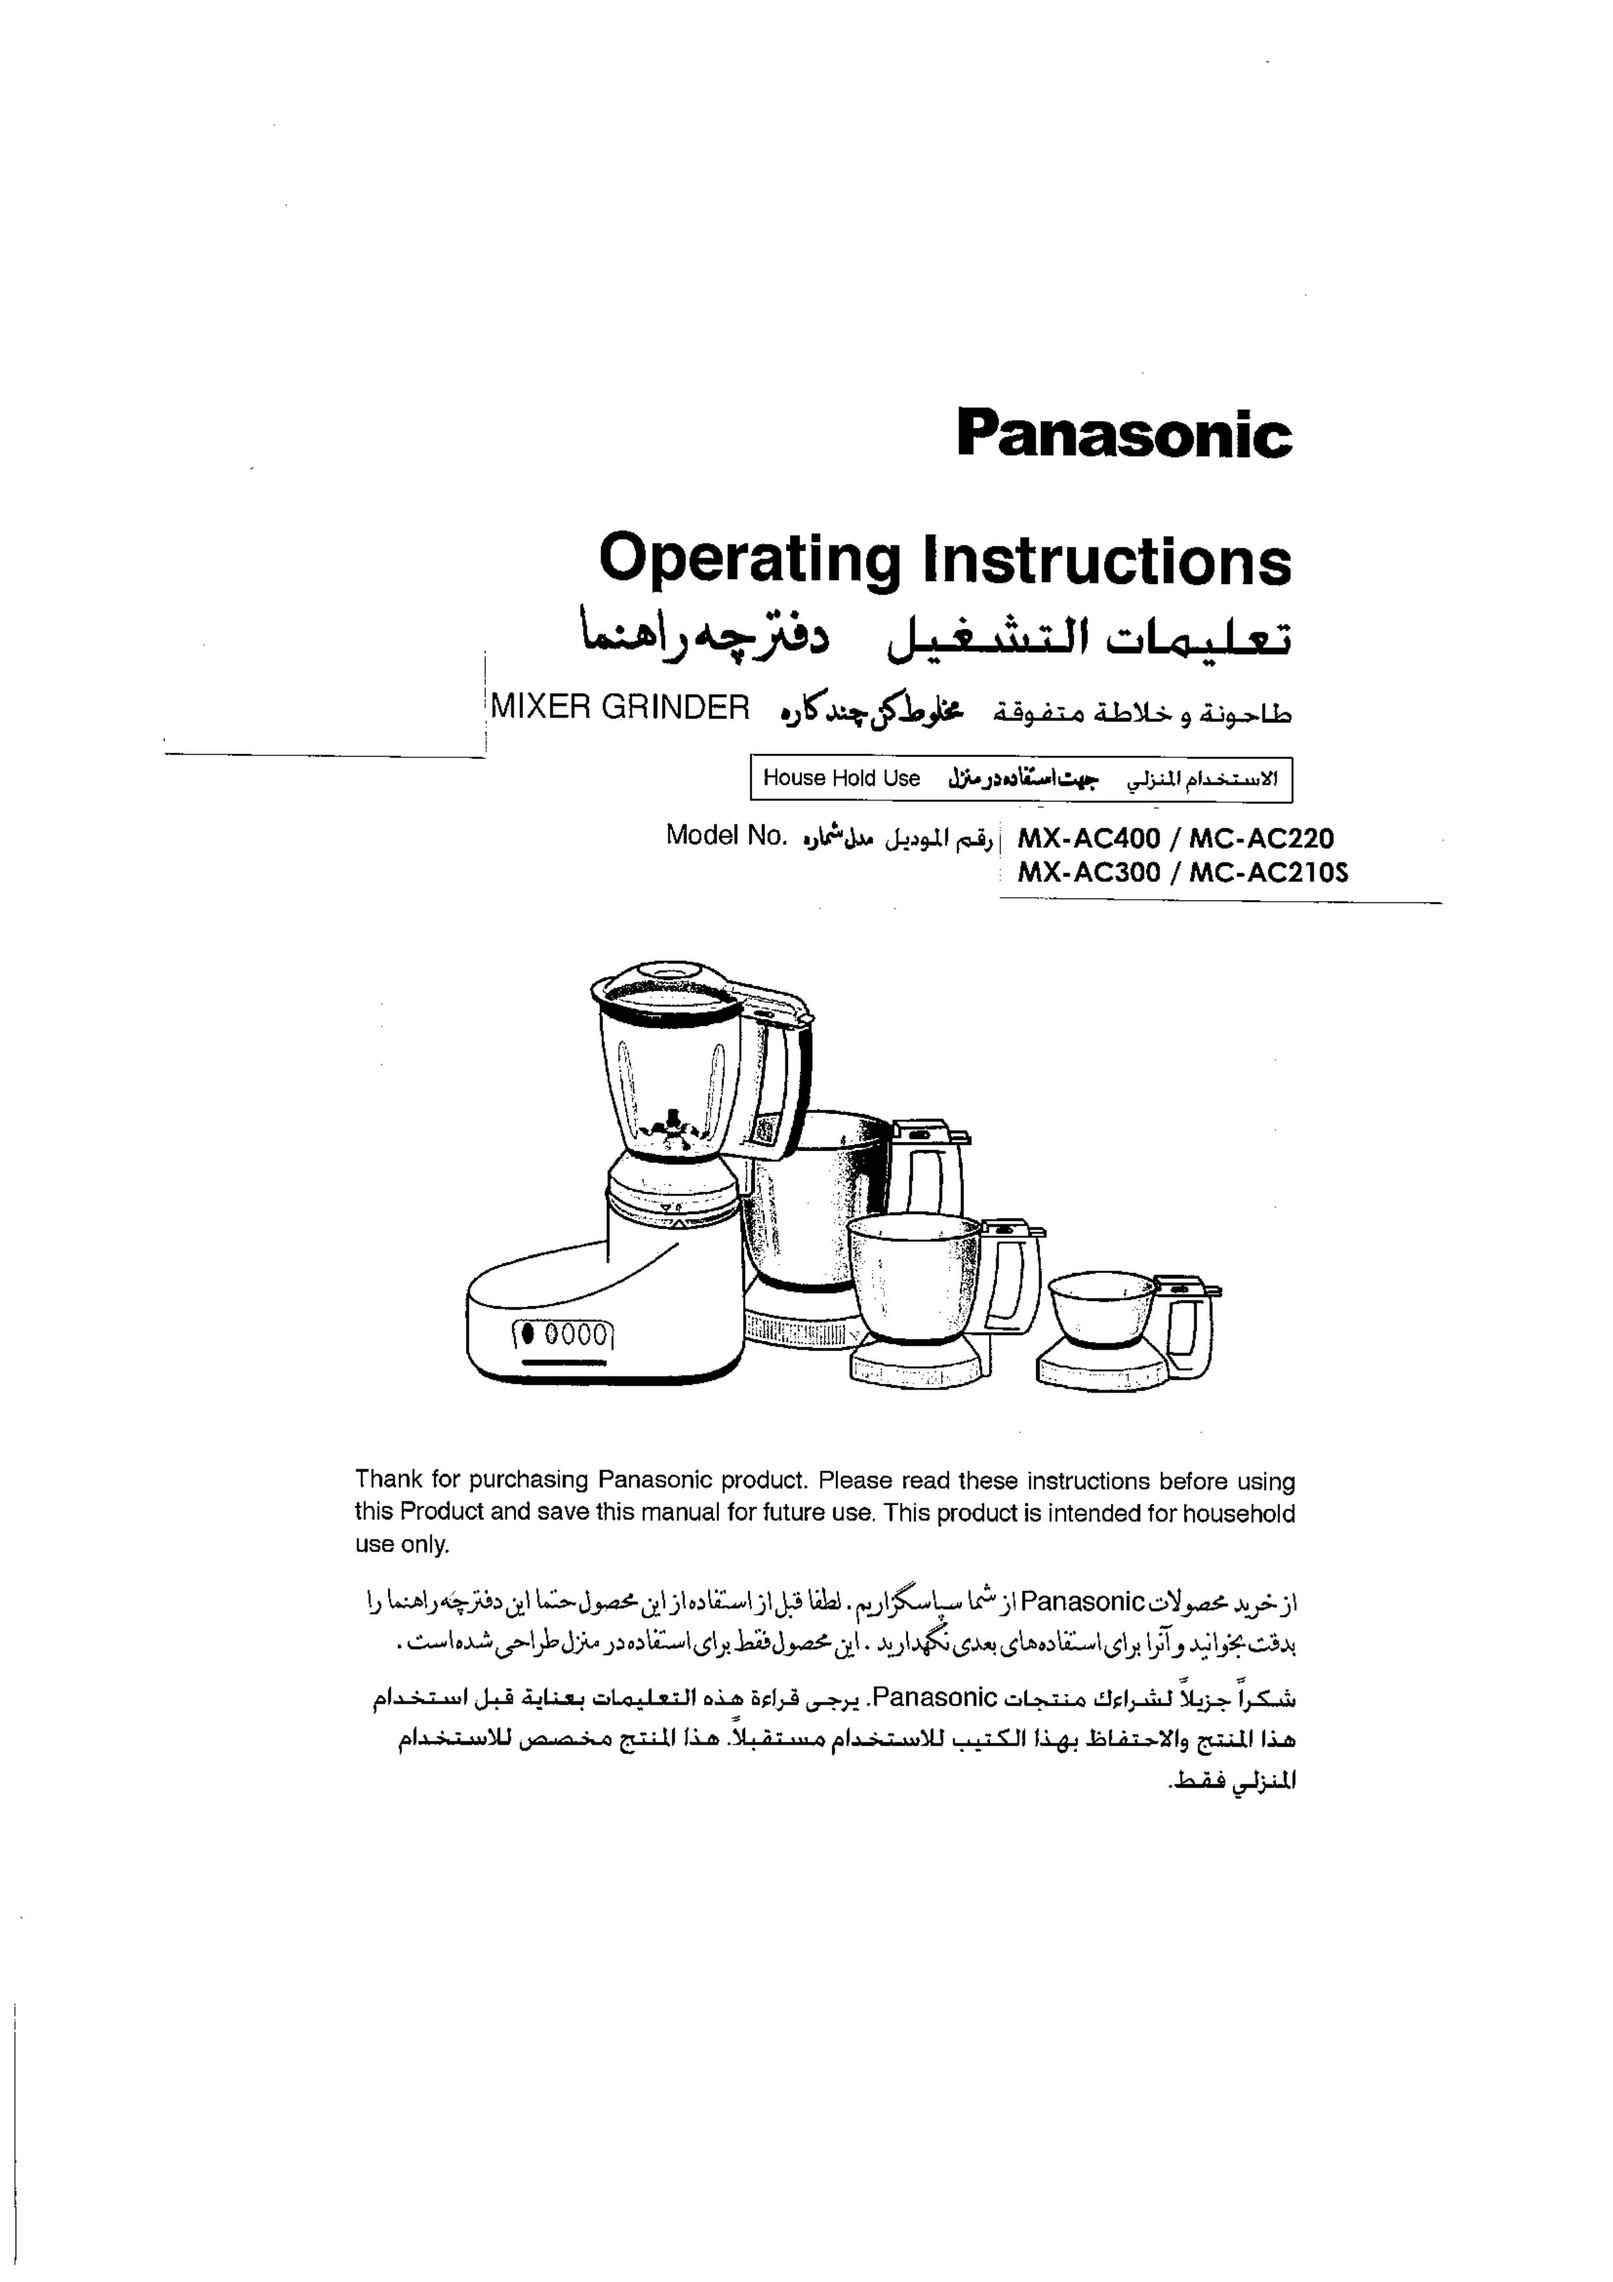 Panasonic Mx-AC400 Food Processor User Manual